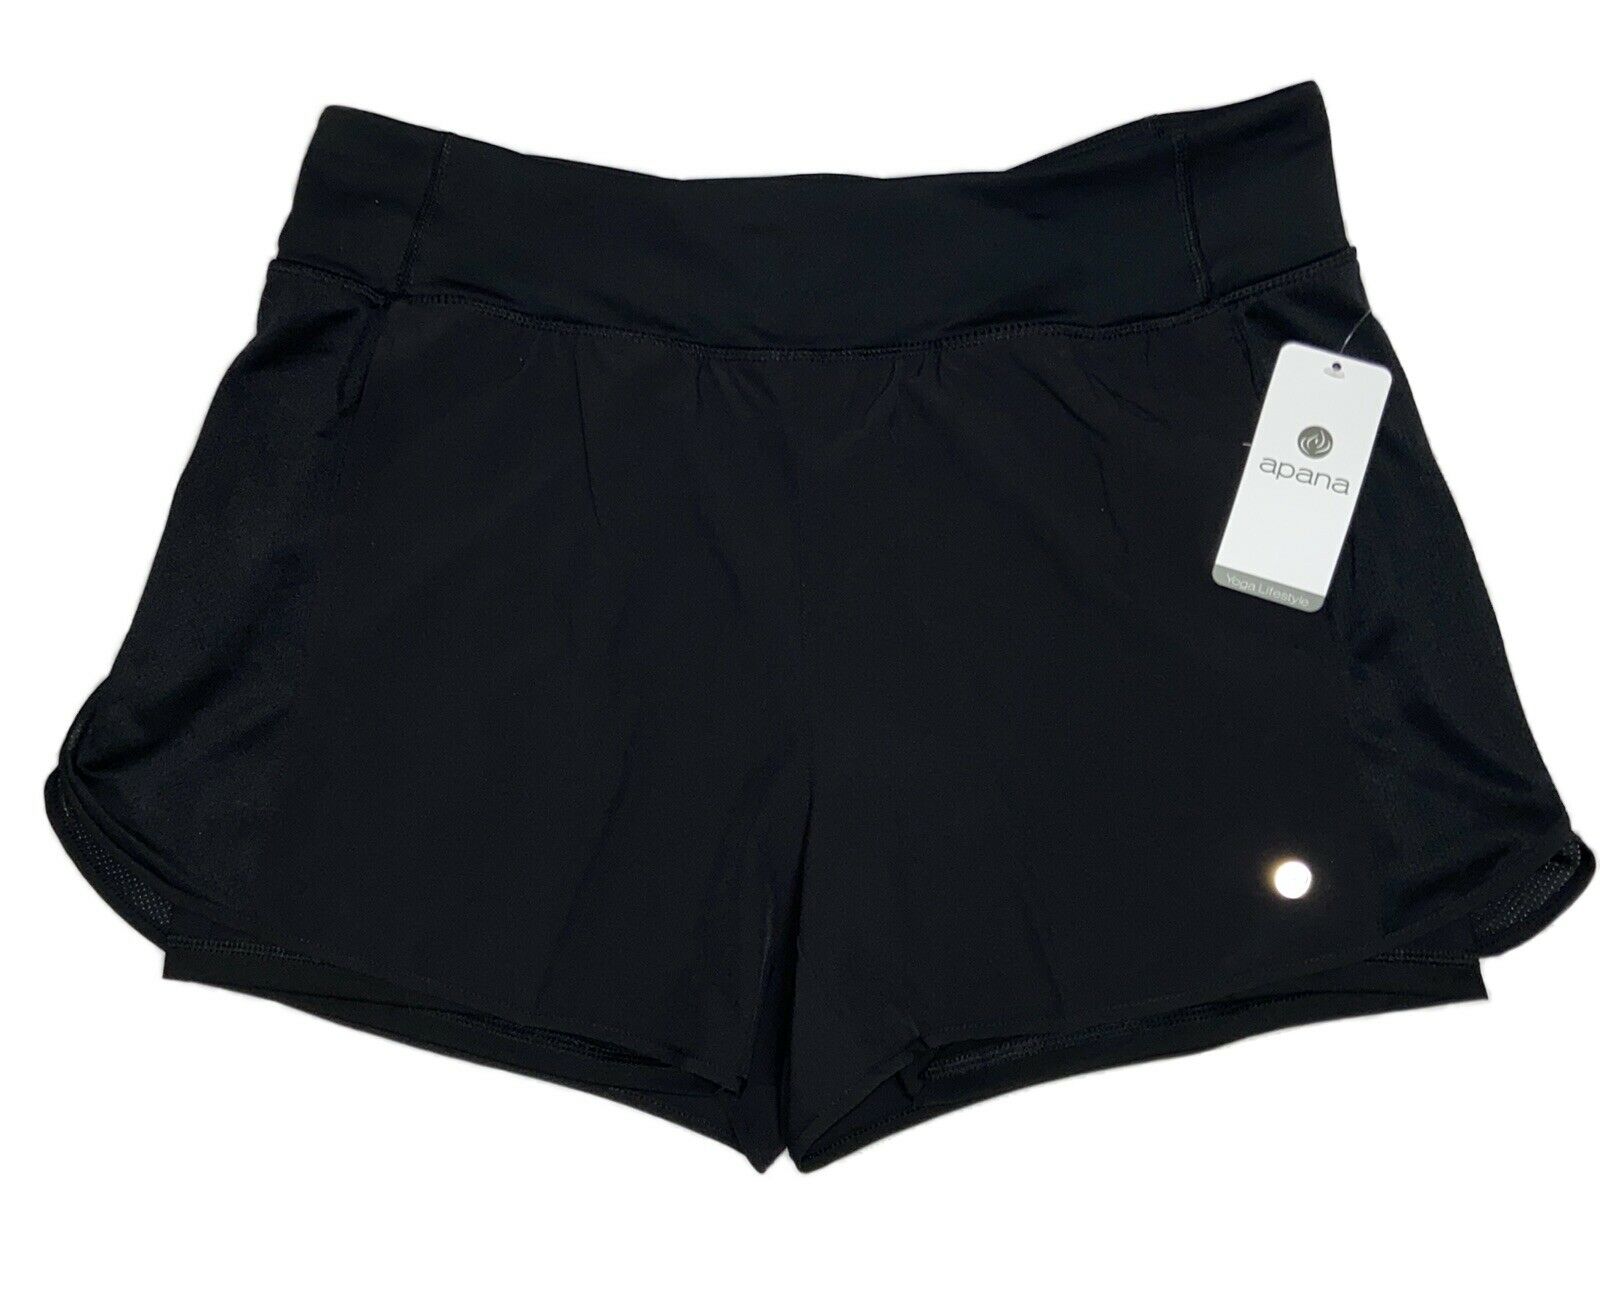 Womens Apana L Black Yoga Running Shorts W/ Pockets & Built In Spandex Nwt $32